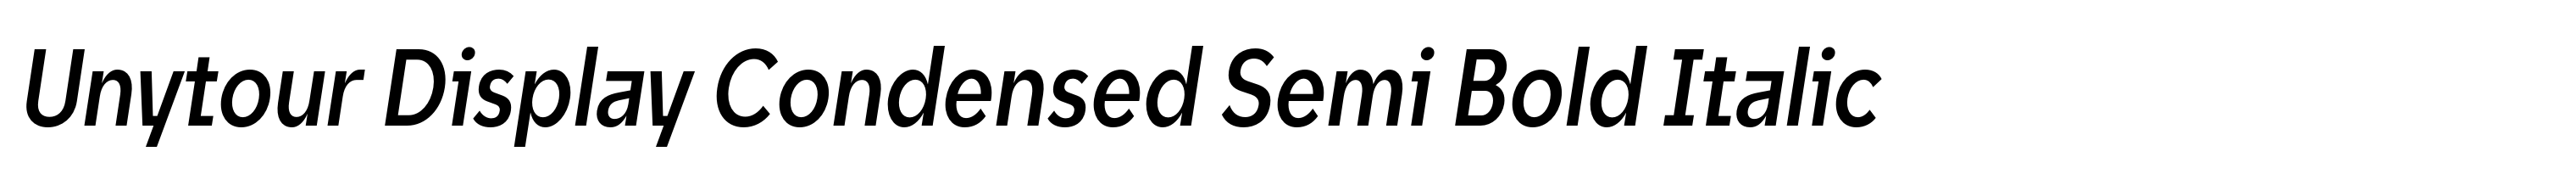 Unytour Display Condensed Semi Bold Italic